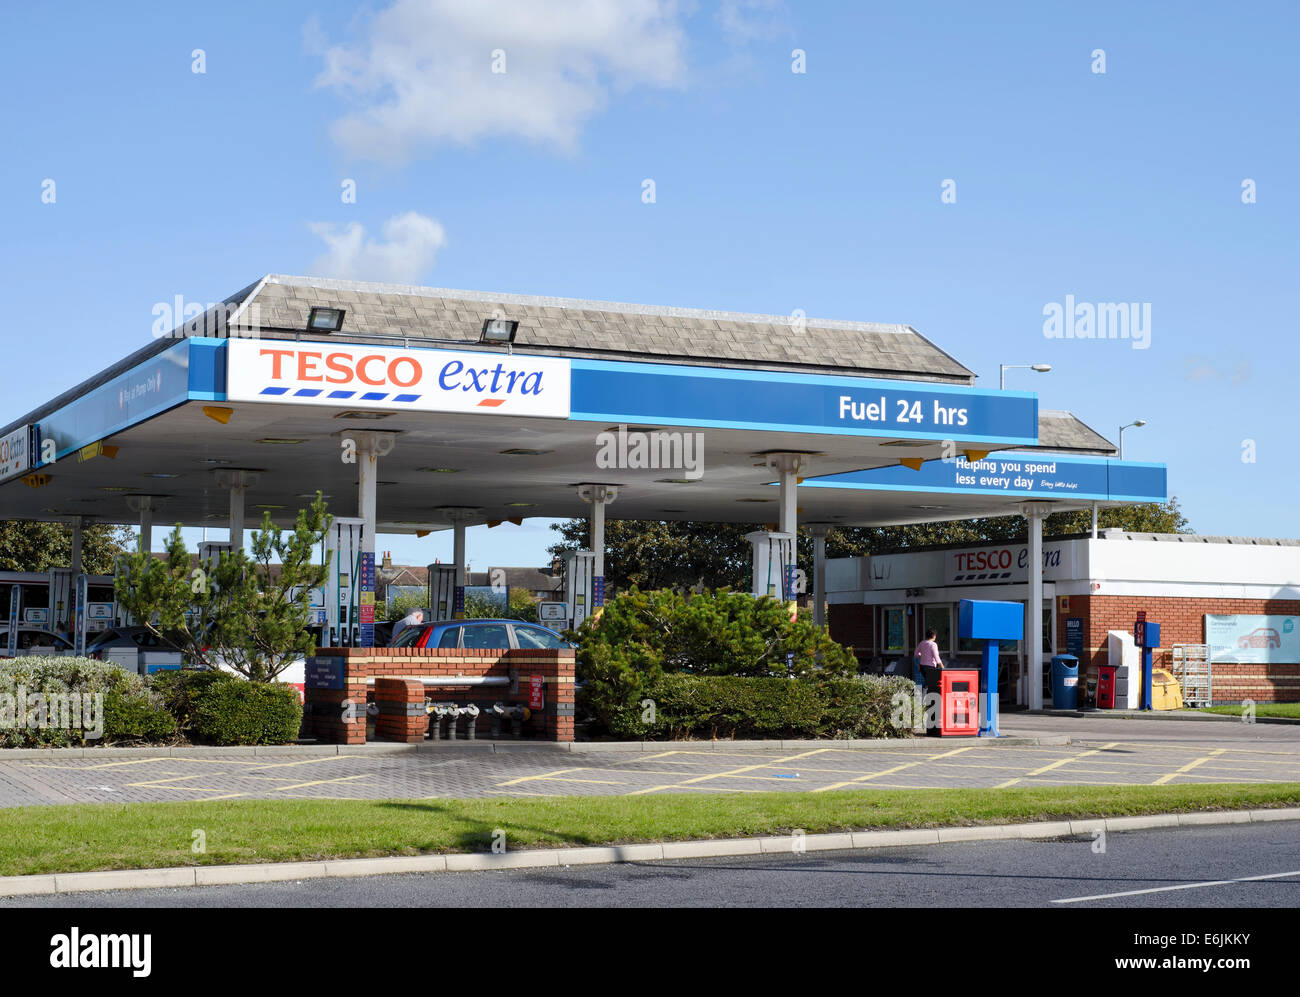 Tesco Petrol Station in Blackpool, Lancashire, England Stock Photo